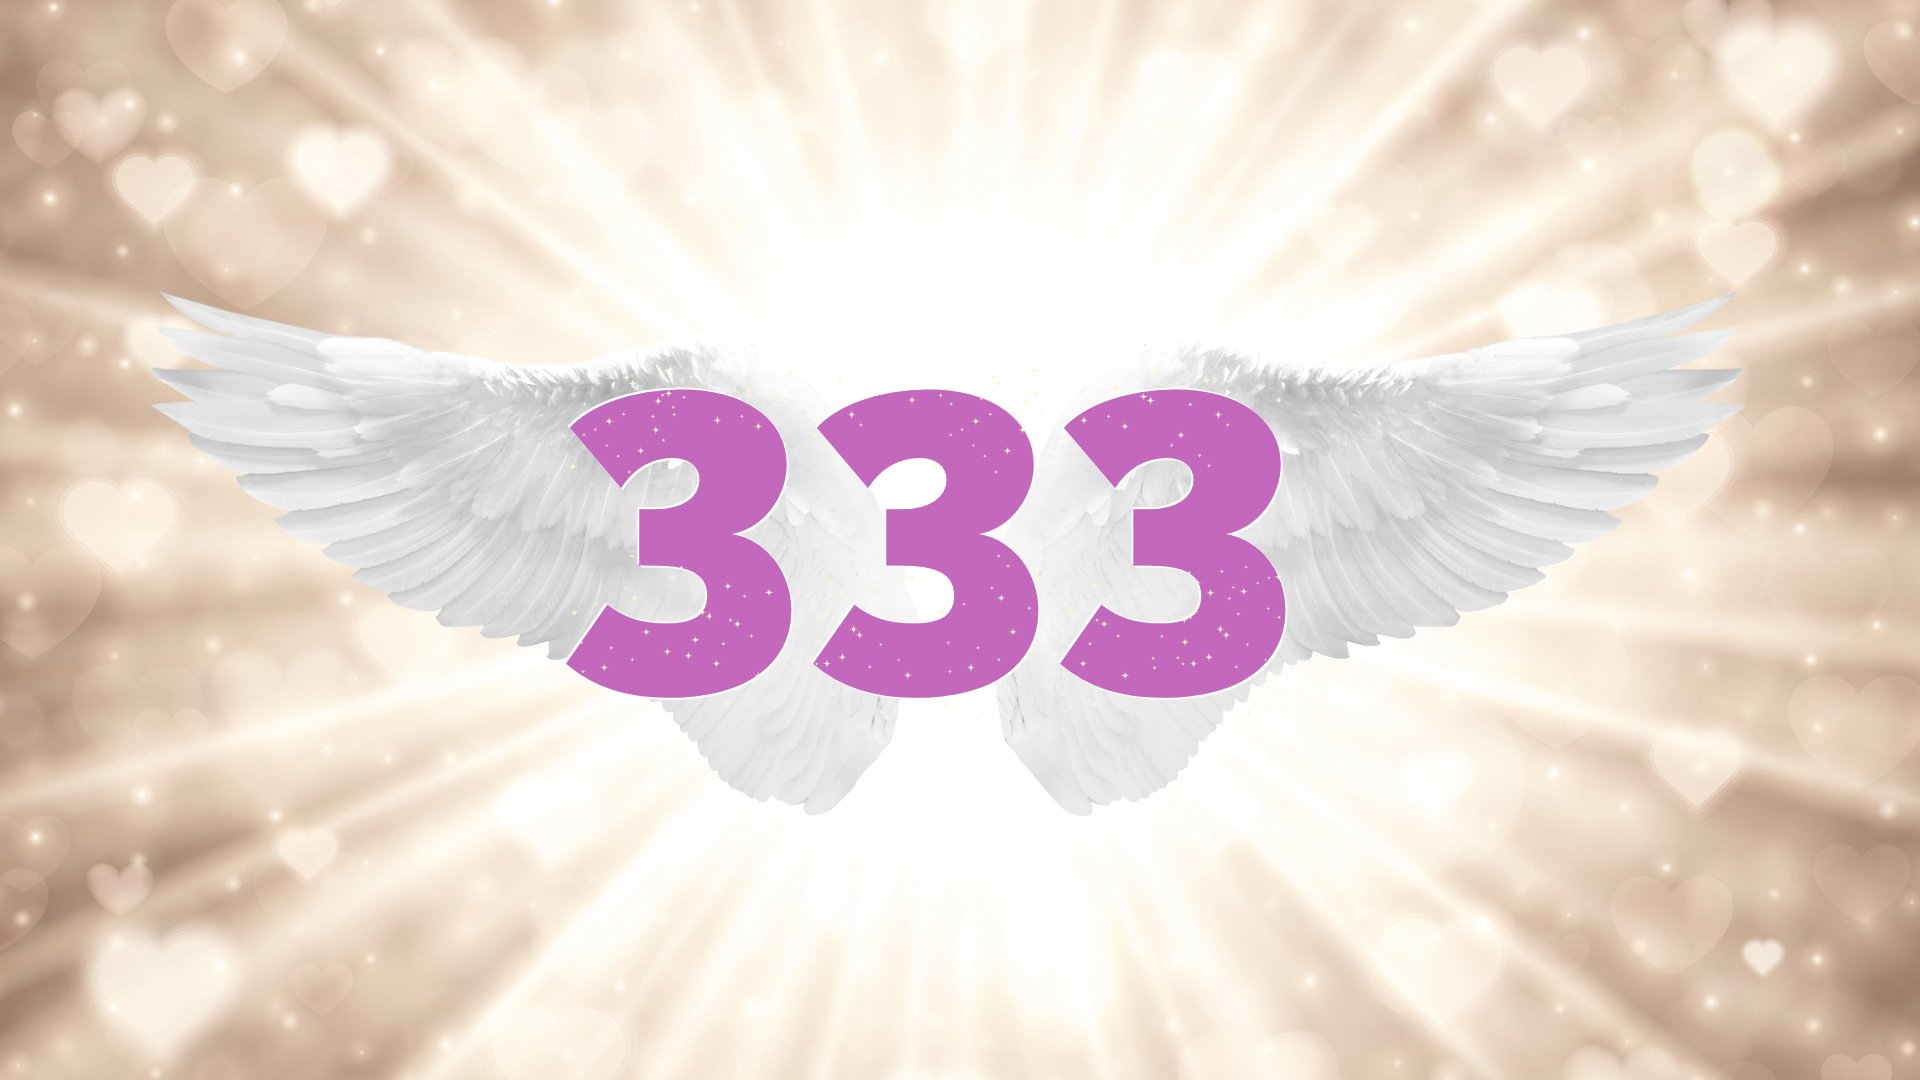 75 333 ideas  angel numbers spirituality numbers